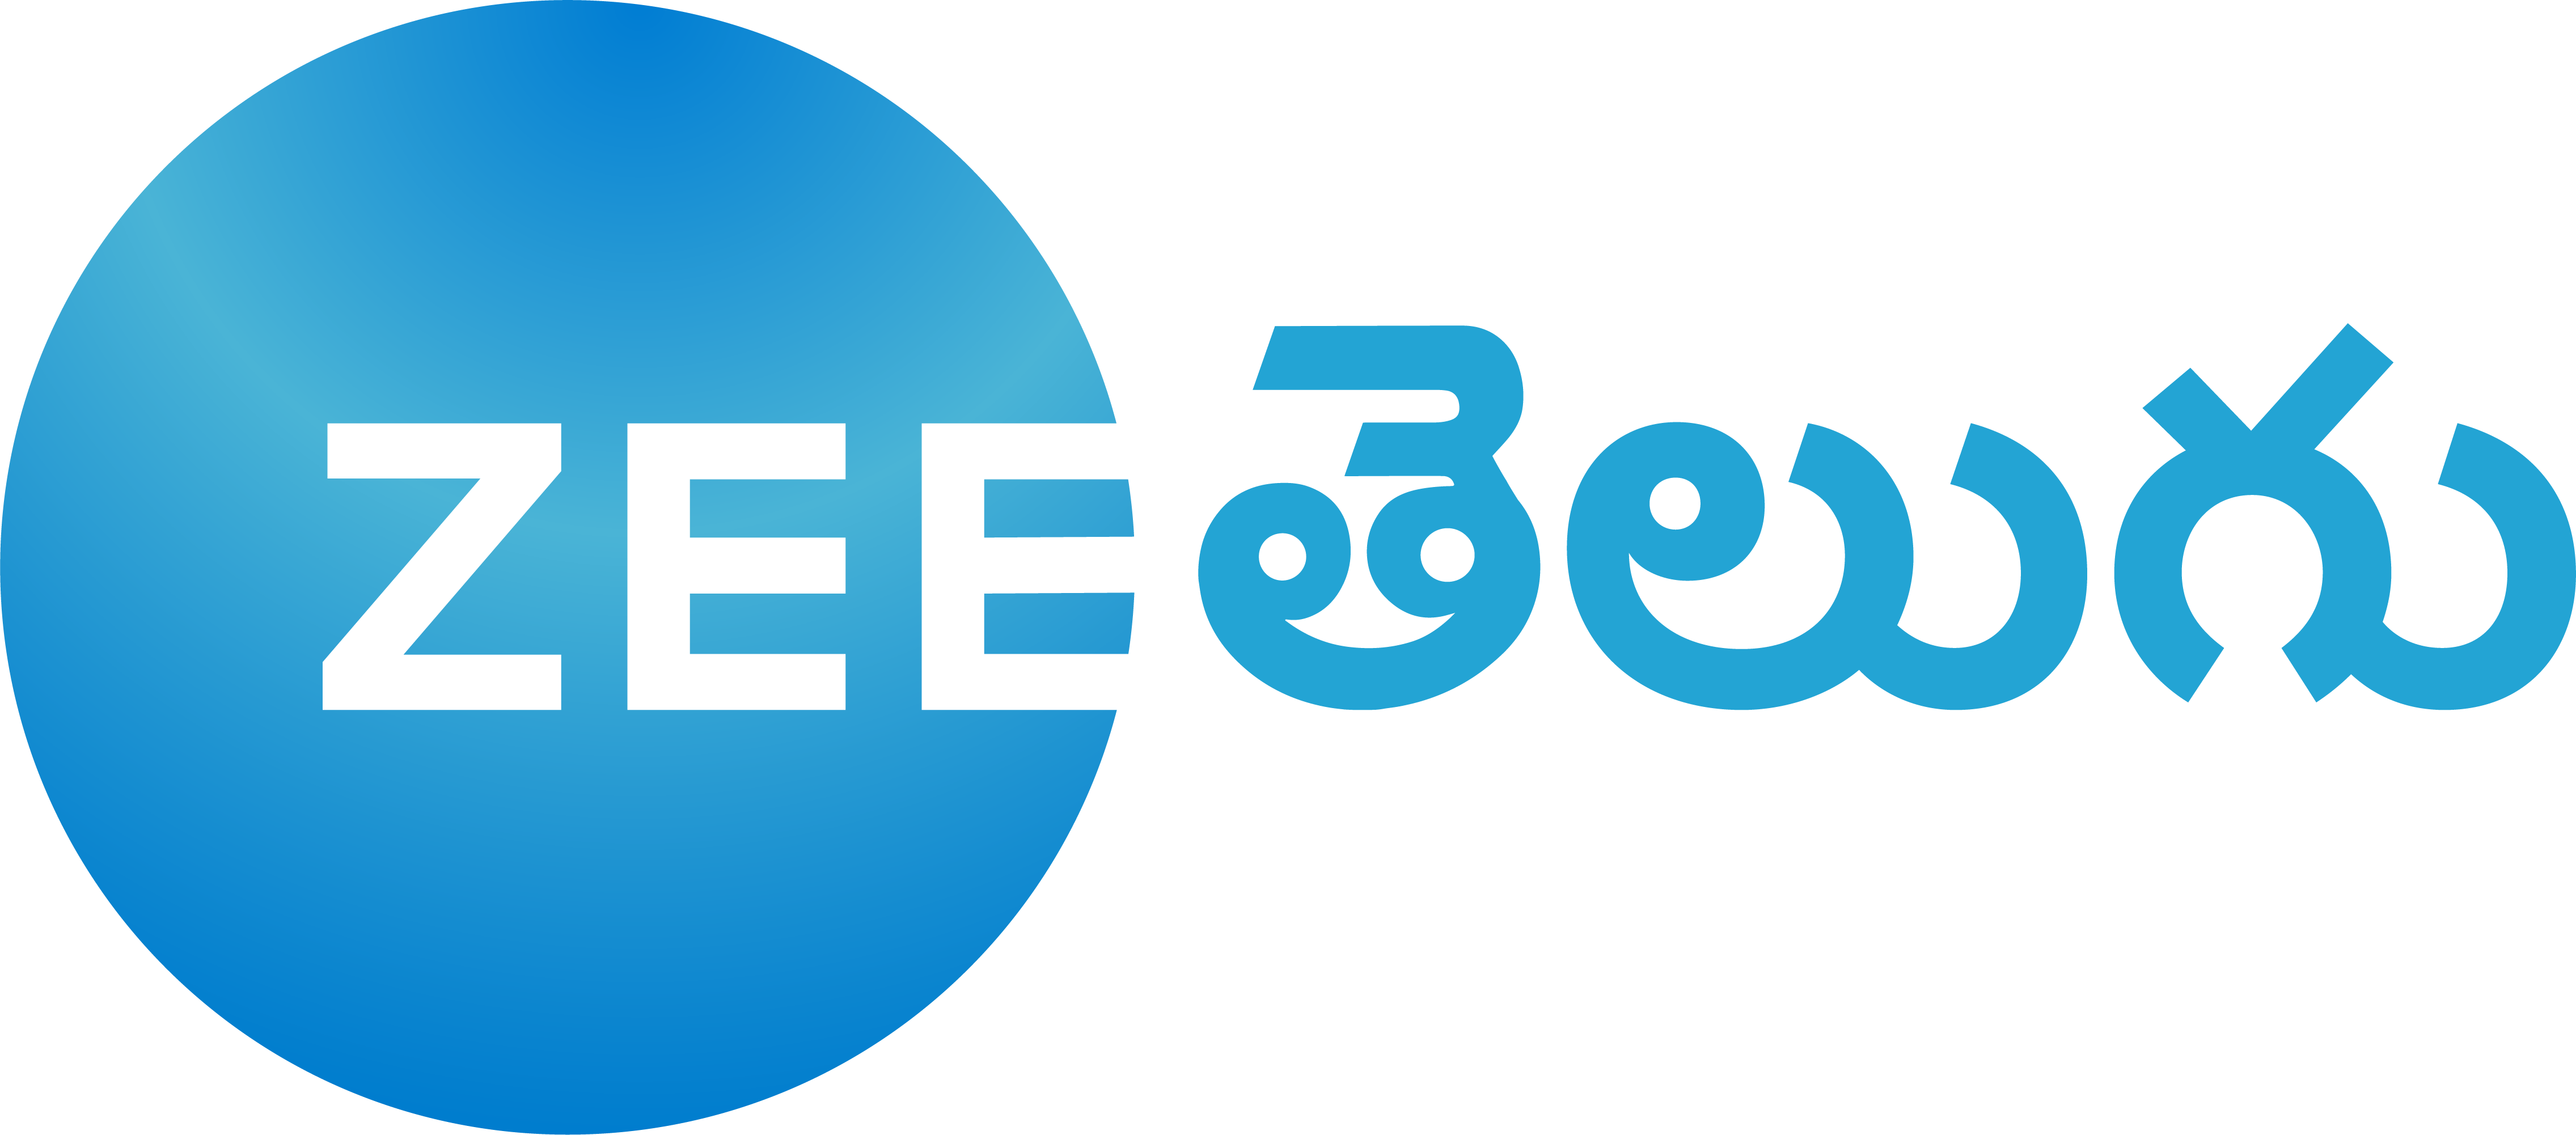 Zee Tv - Usa